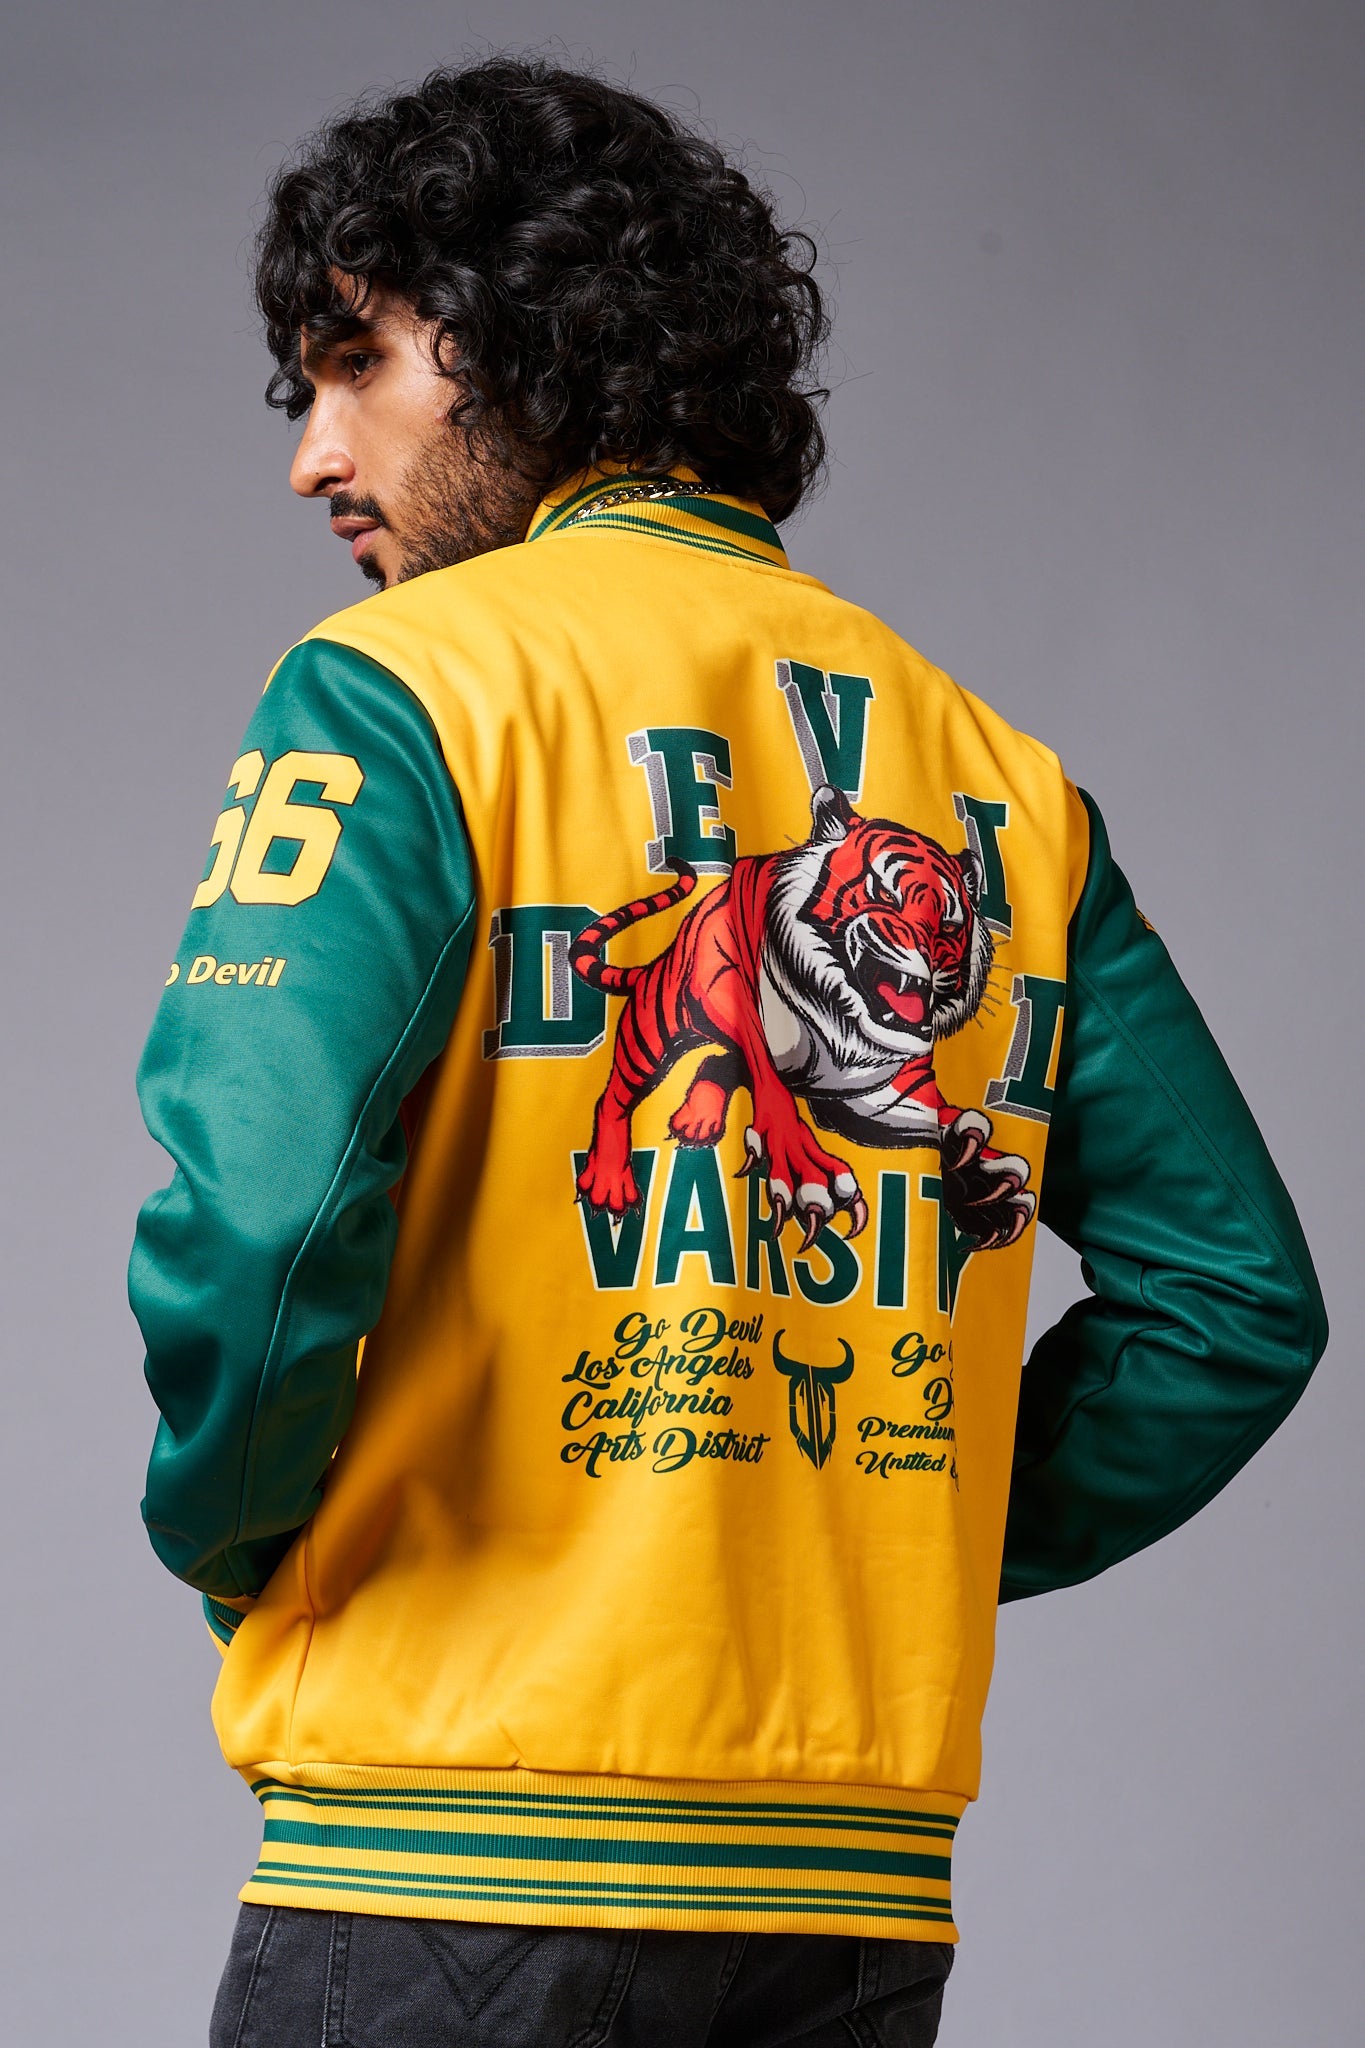 Tiger Printed Yellow & Green Varsity Jacket for Men - Go Devil